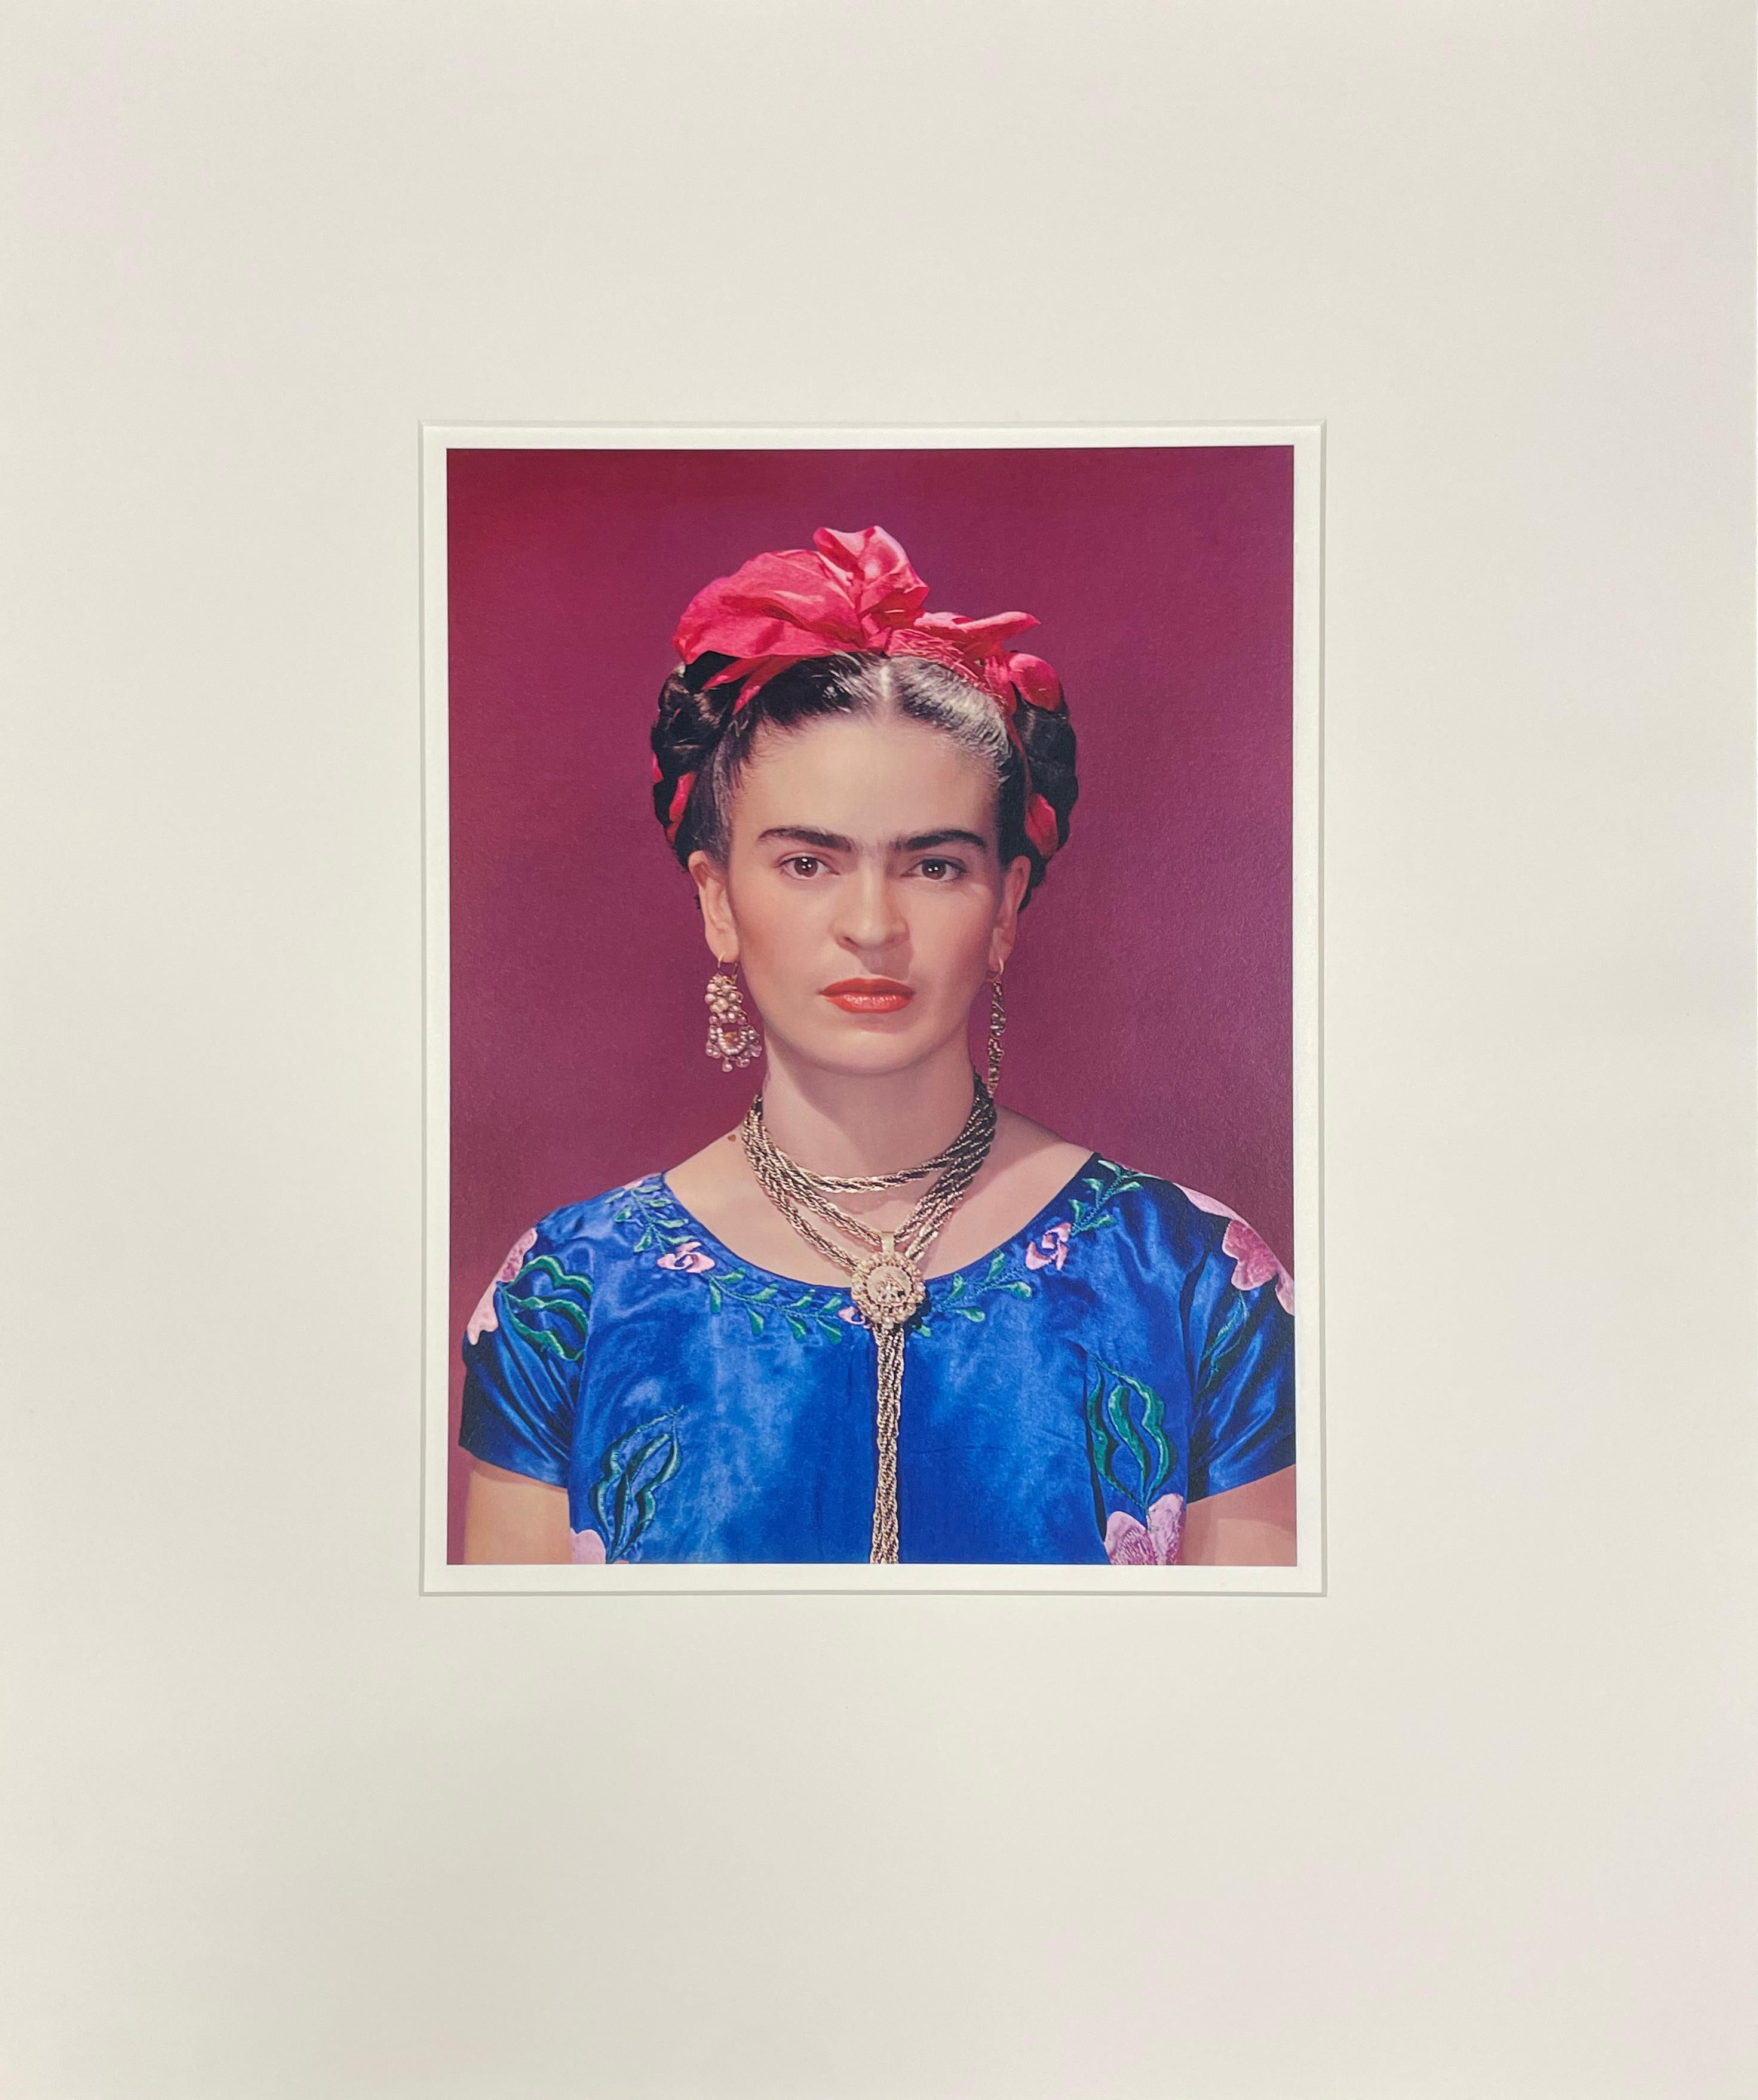 Frida Kahlo in Blue Silk Dress - Photograph by Nickolas Muray